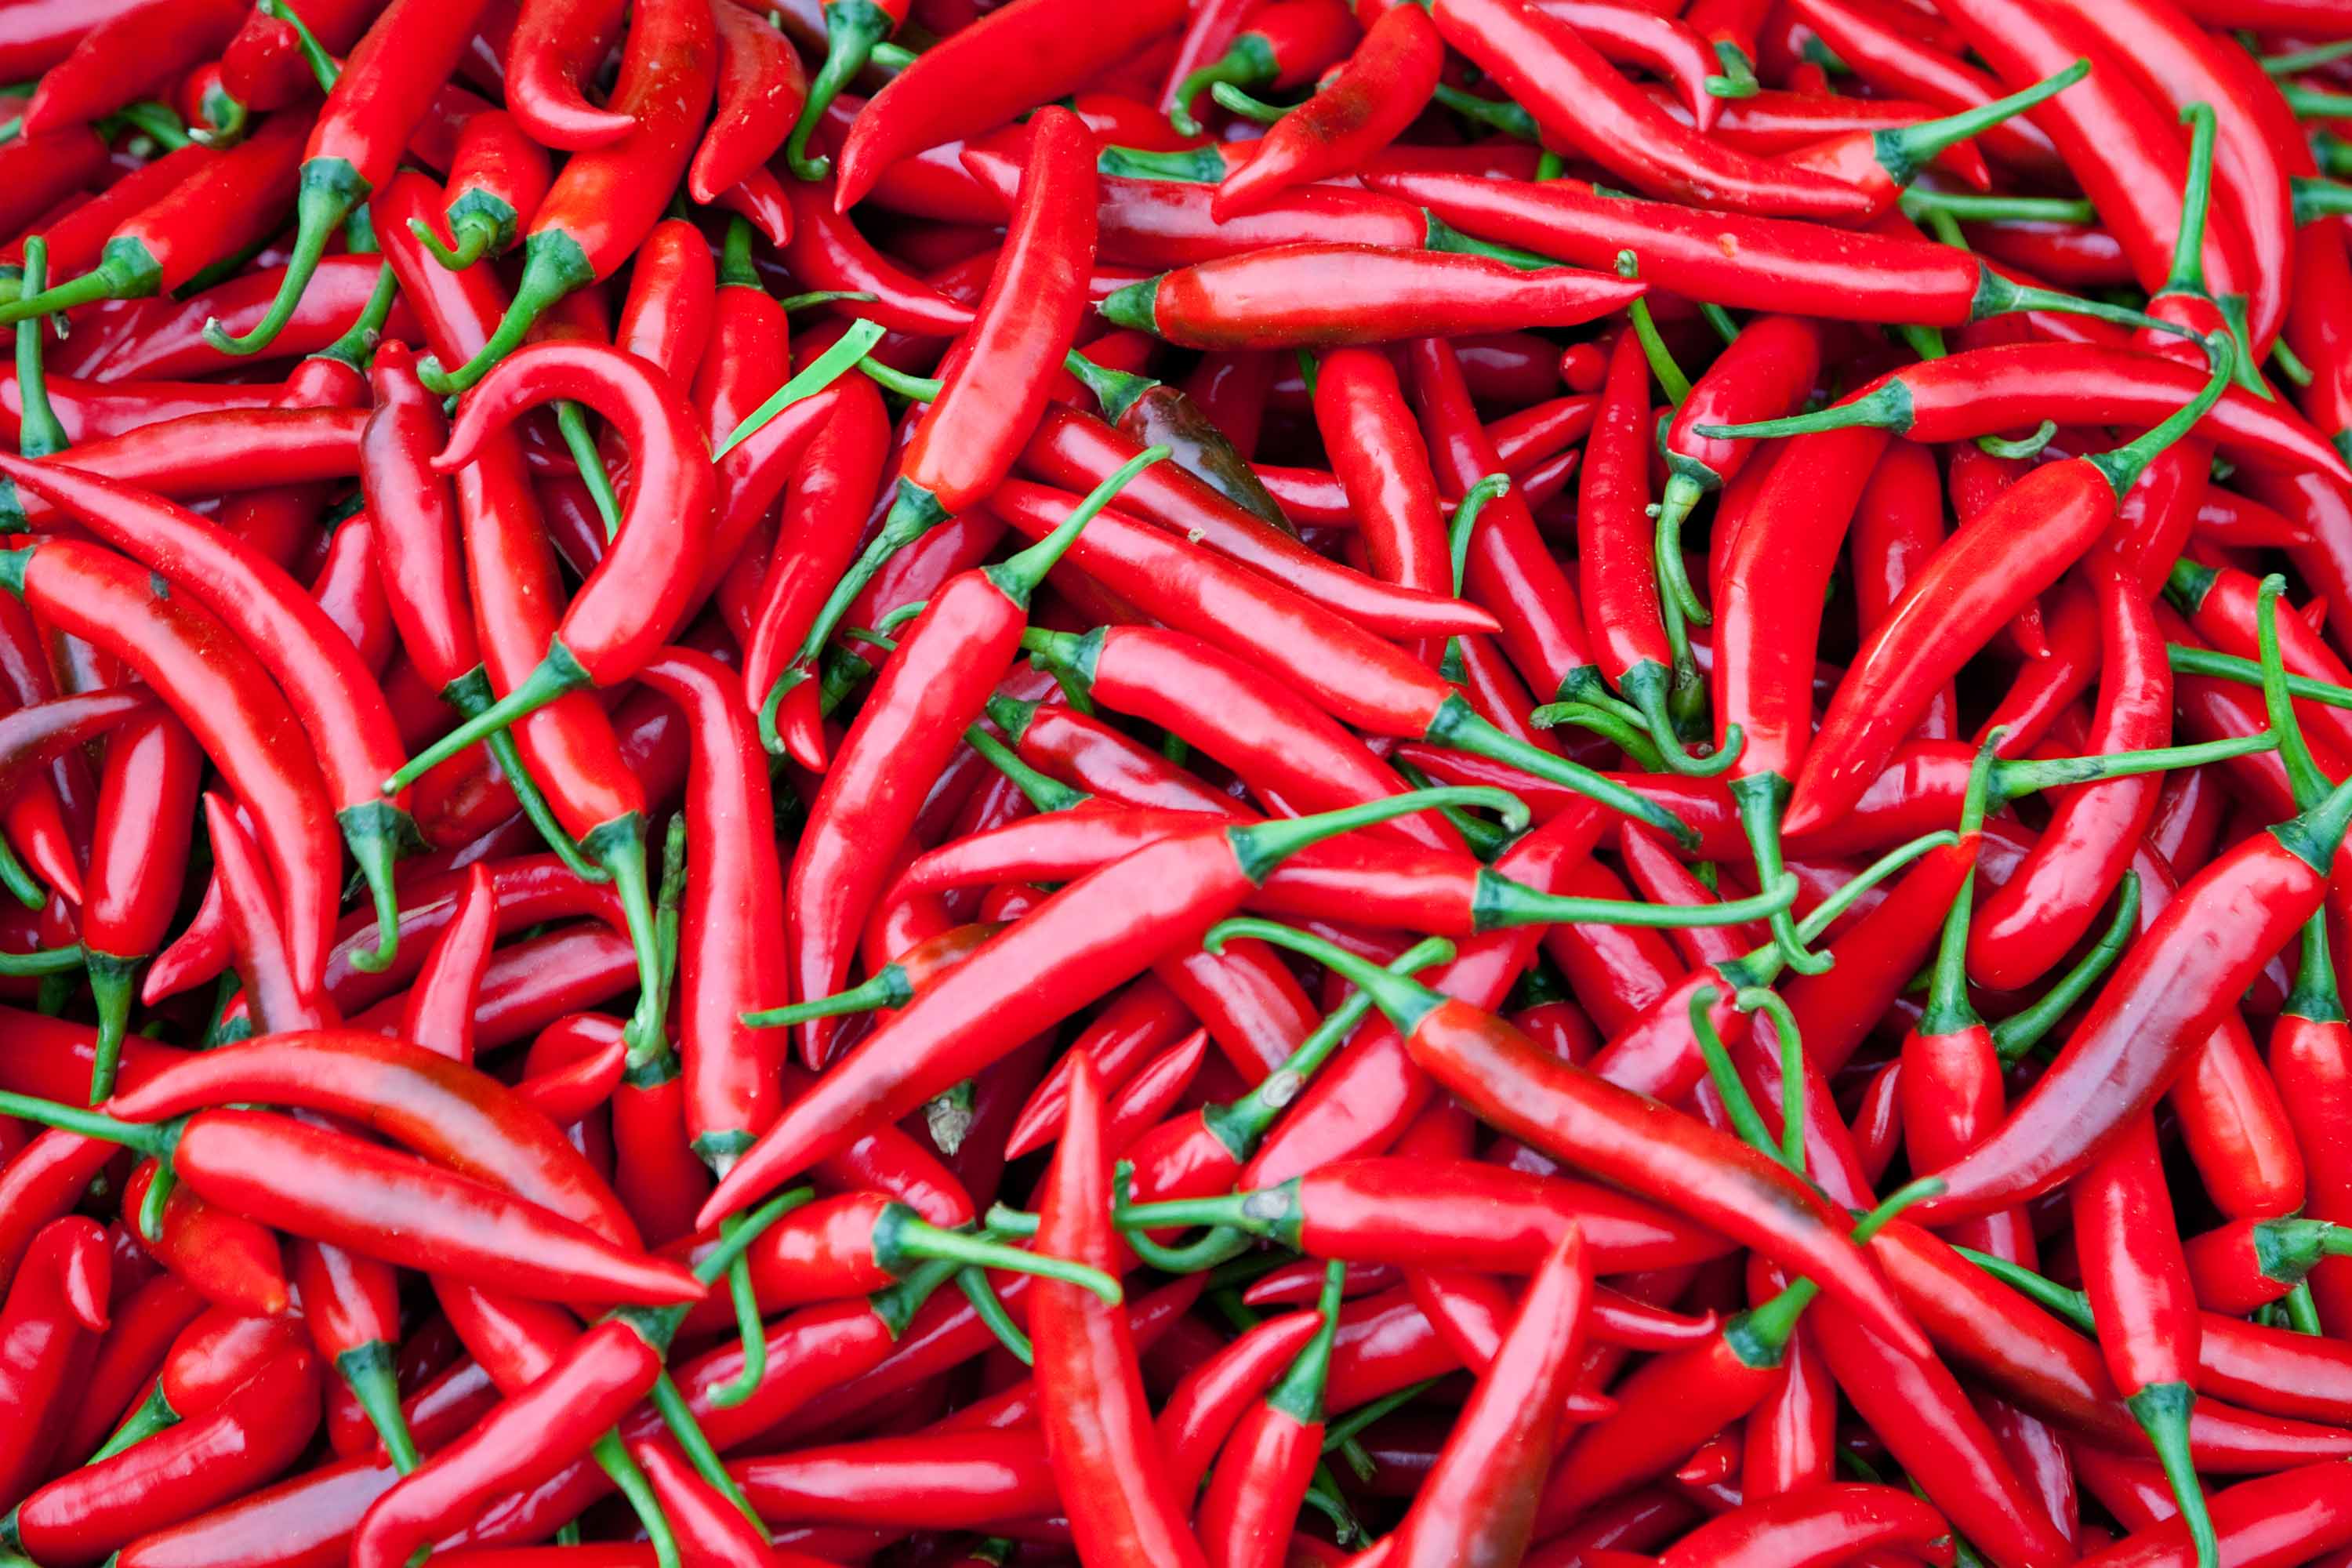 https://media.cnn.com/api/v1/images/stellar/prod/191216131352-red-chili-peppers-stock.jpg?q=w_3000,h_2000,x_0,y_0,c_fill